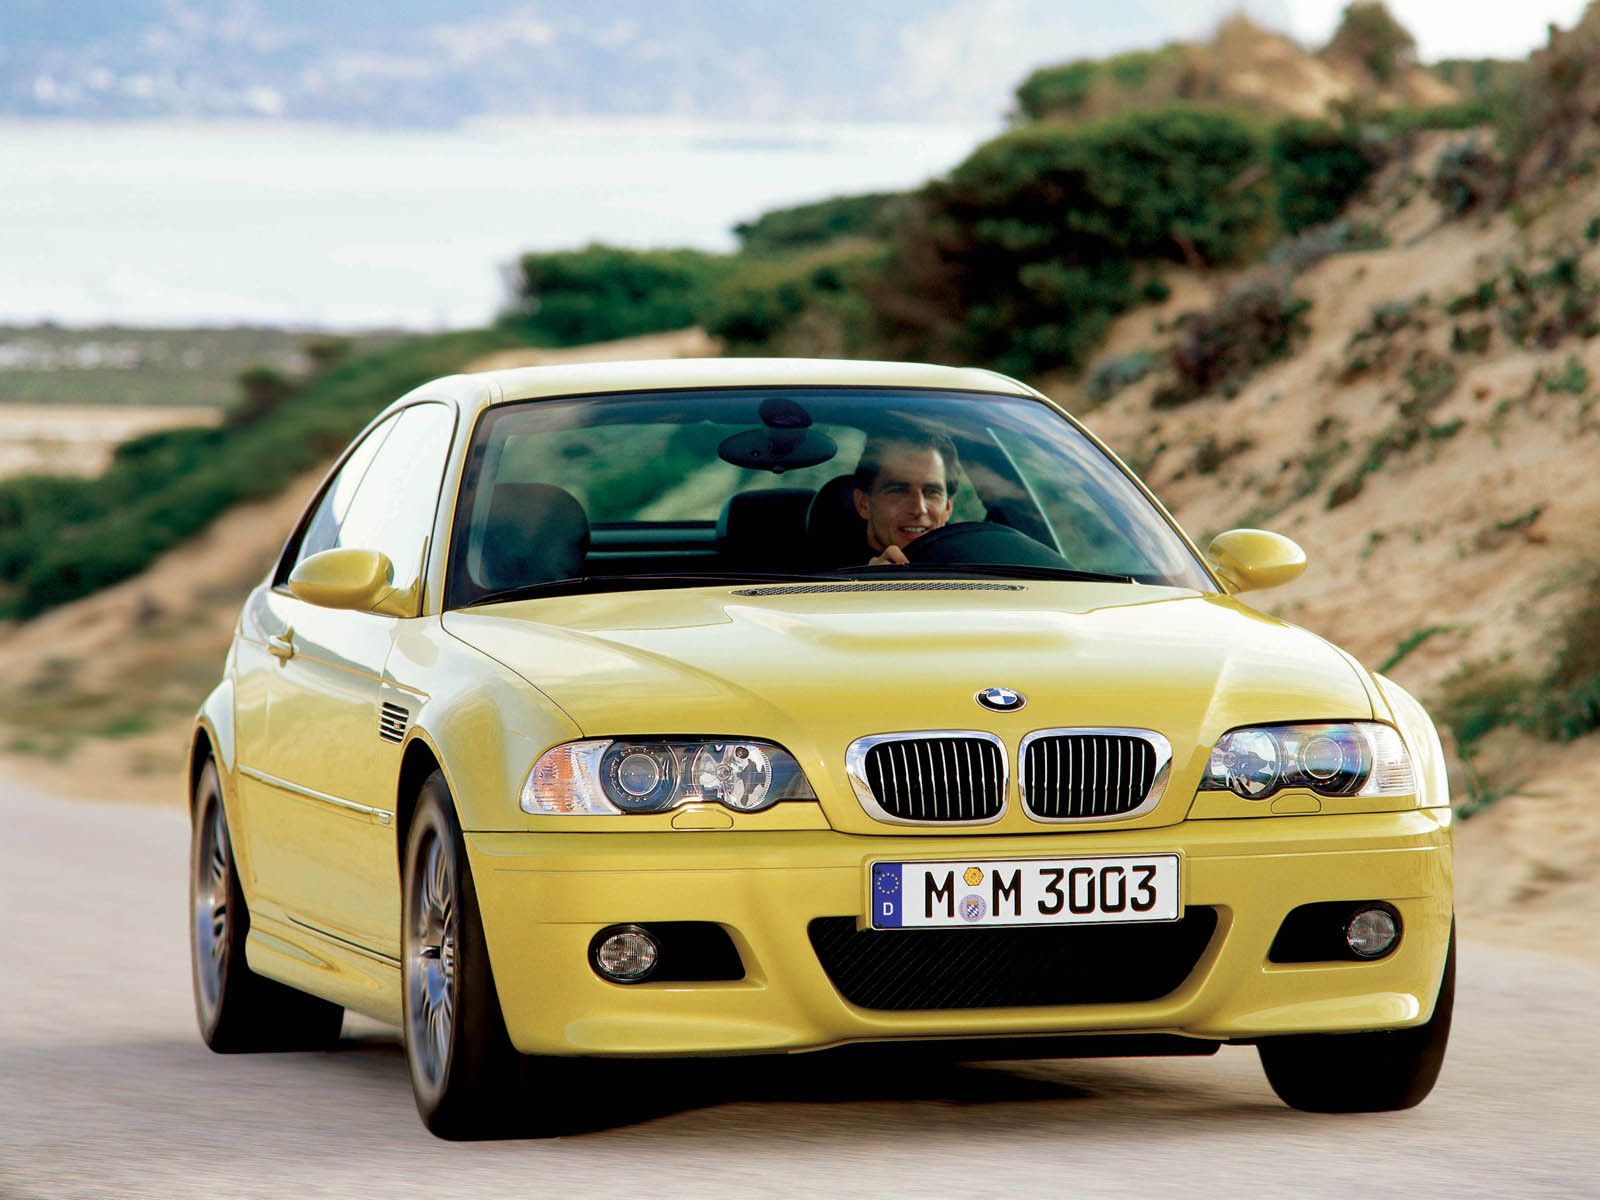 Yellow BMW E46 M3 driving